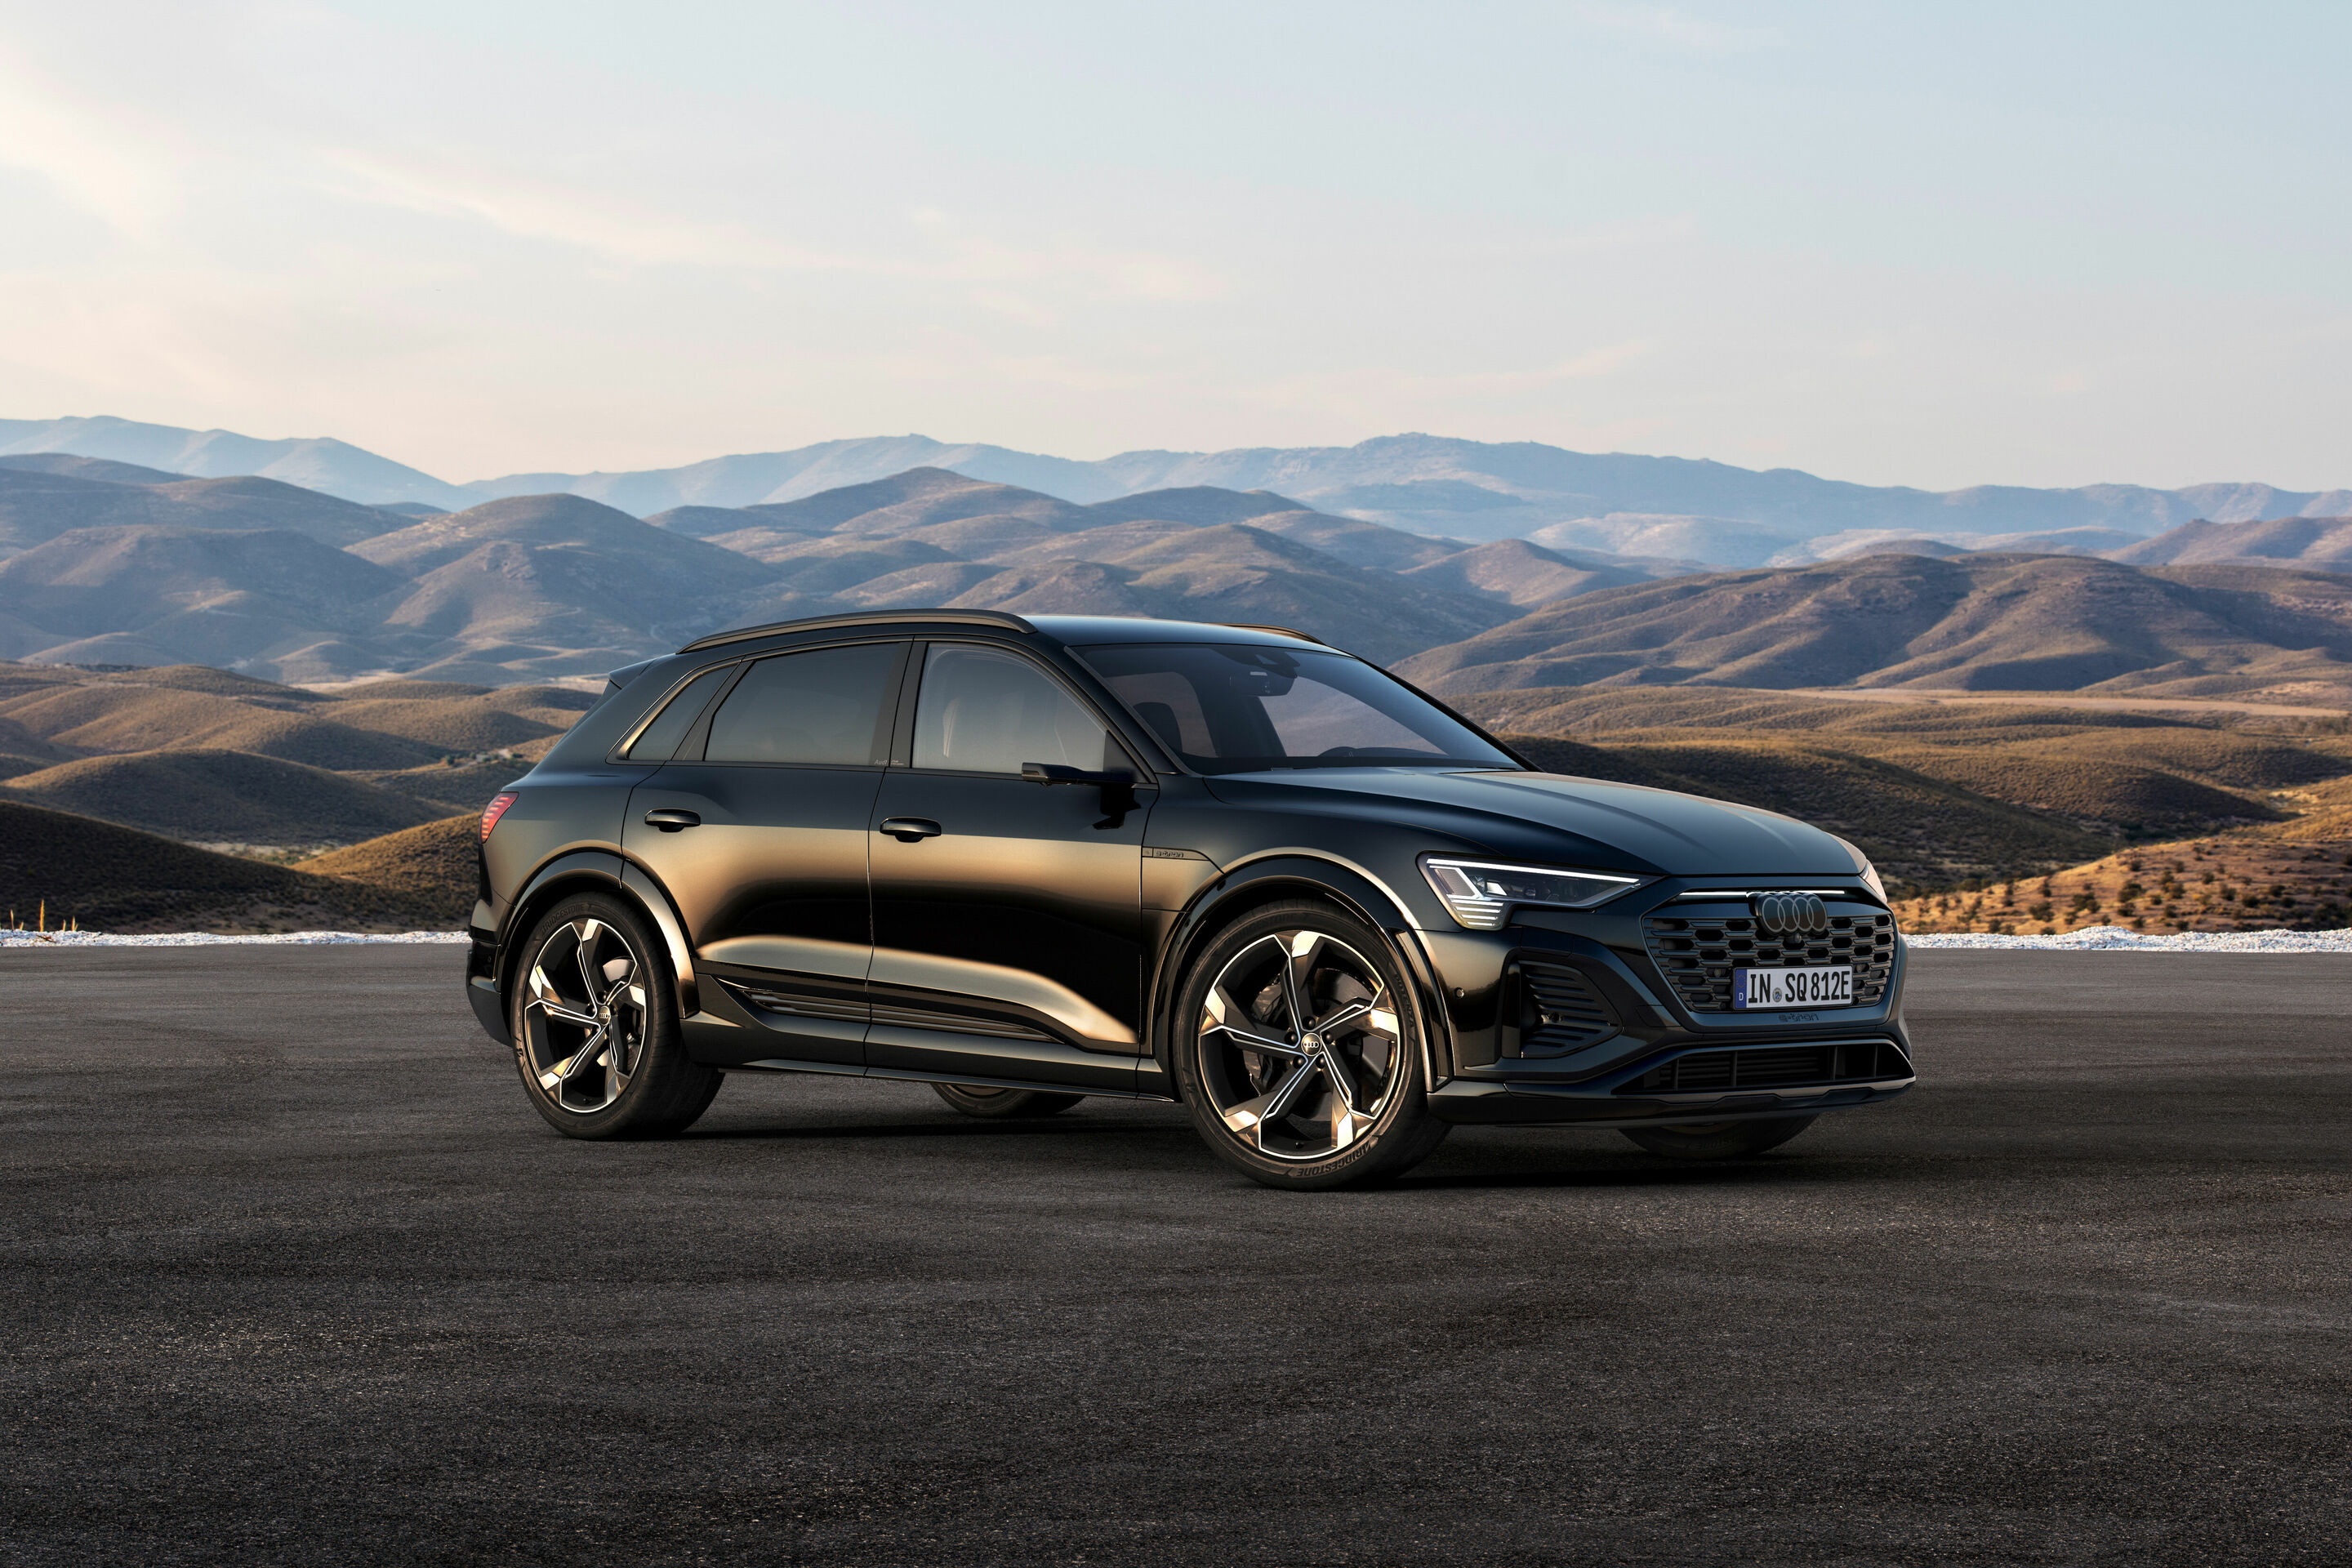 2024 Audi Q8 e-tron Release Date, Features, & Performance